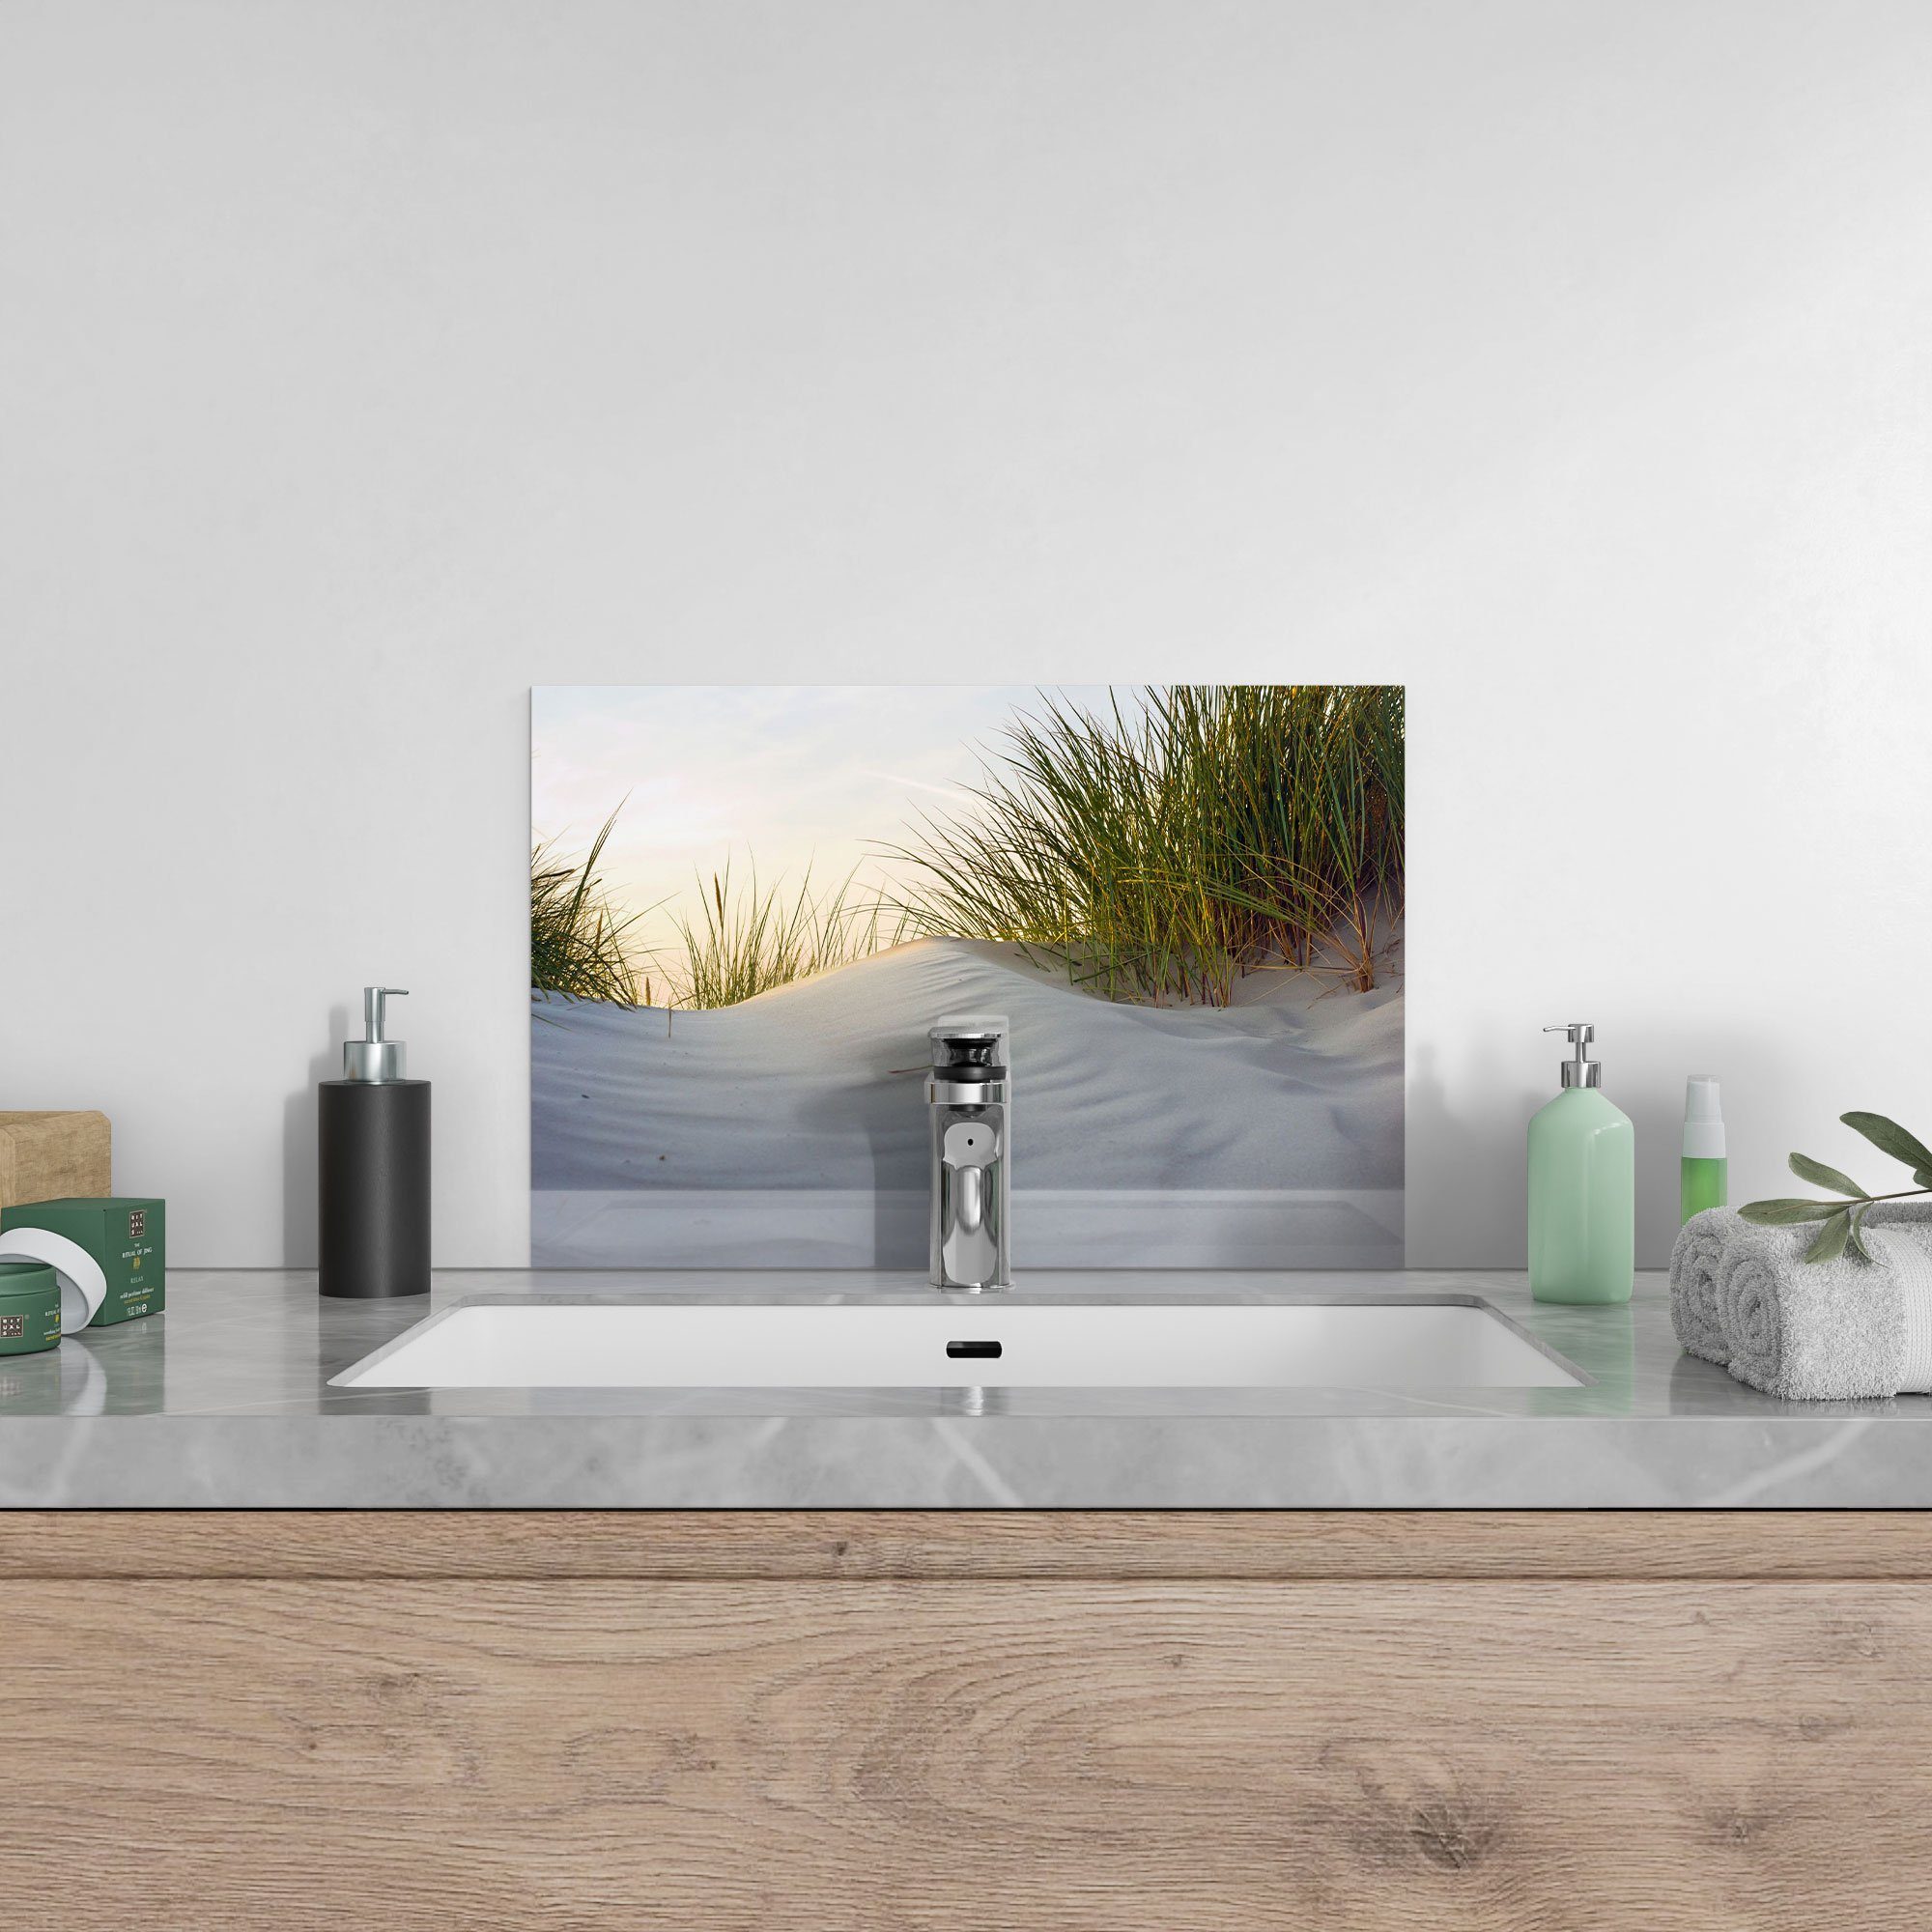 DEQORI mit Badrückwand Herdblende Glas Dünengras', 'Düne Spritzschutz Küchenrückwand